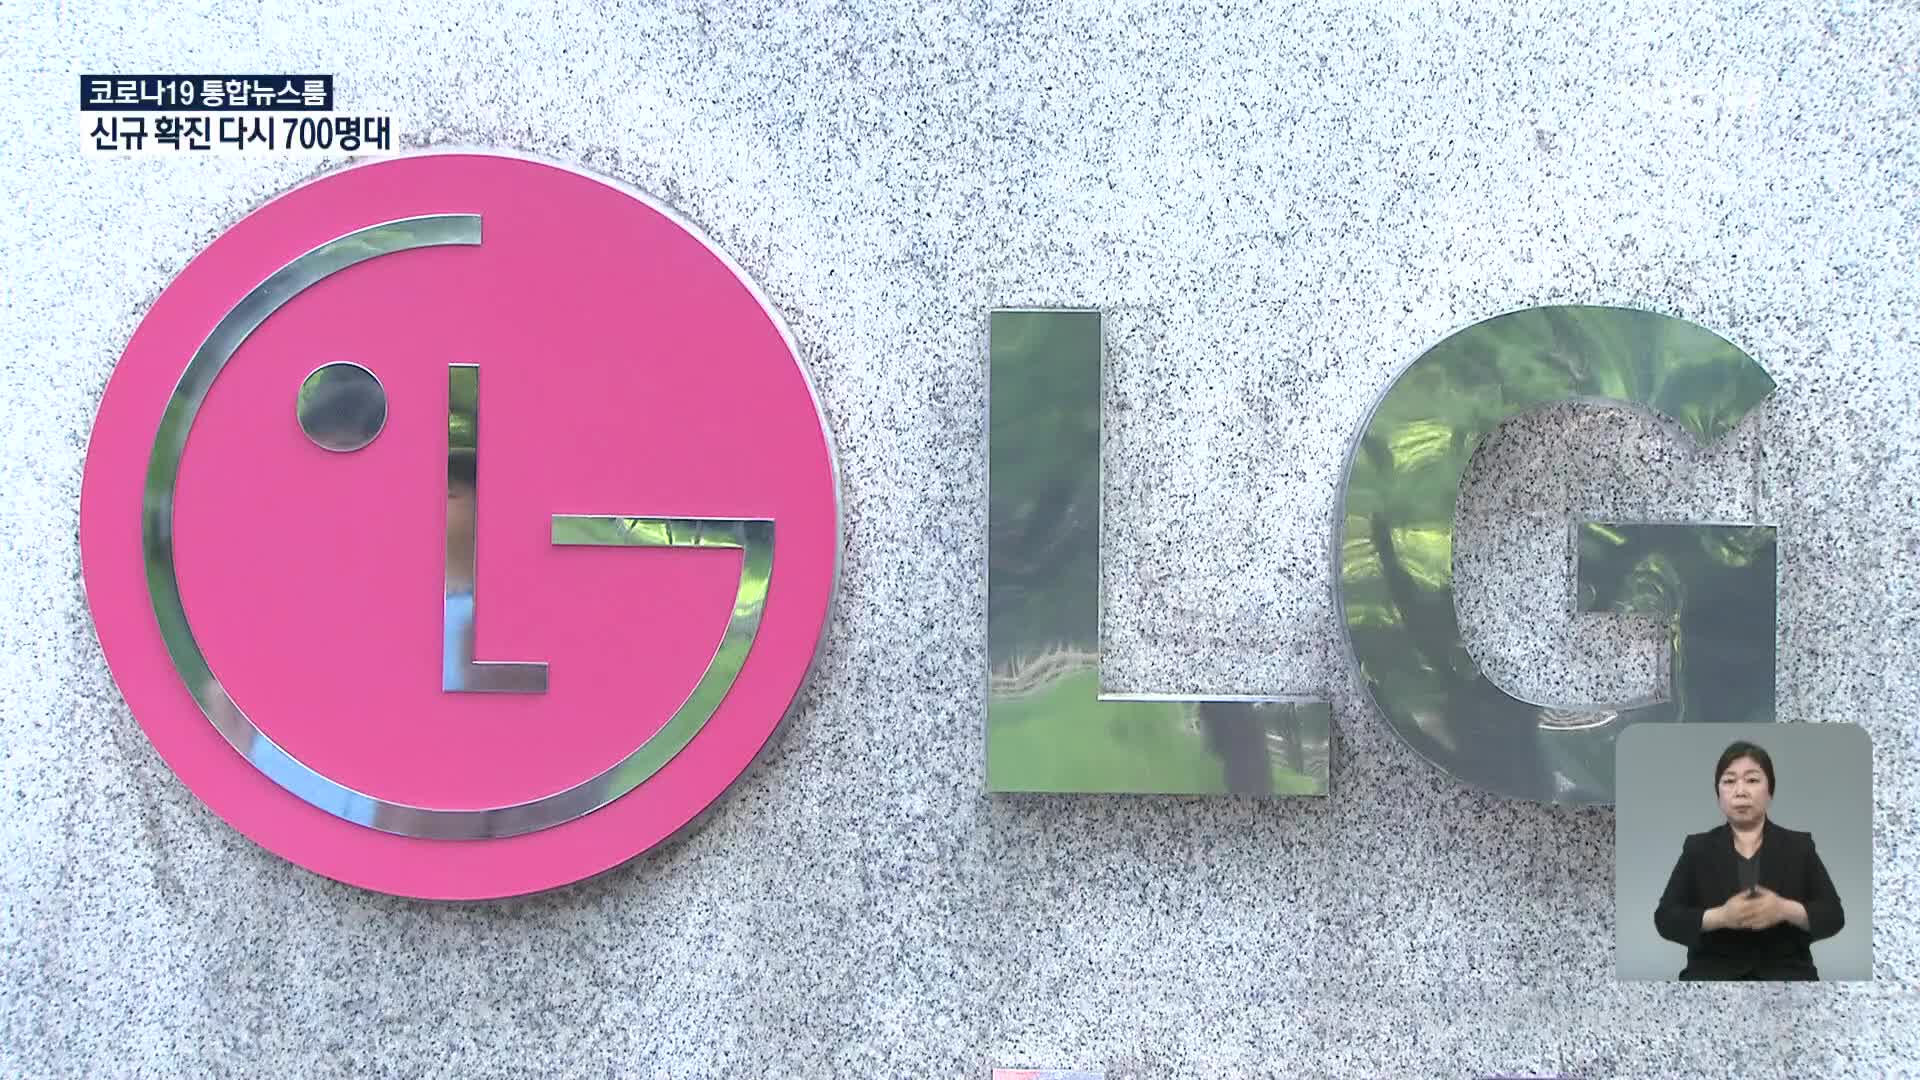 “GM-LG 미 배터리 제2공장 설립”…완성차-배터리 업체 합종연횡 가속화